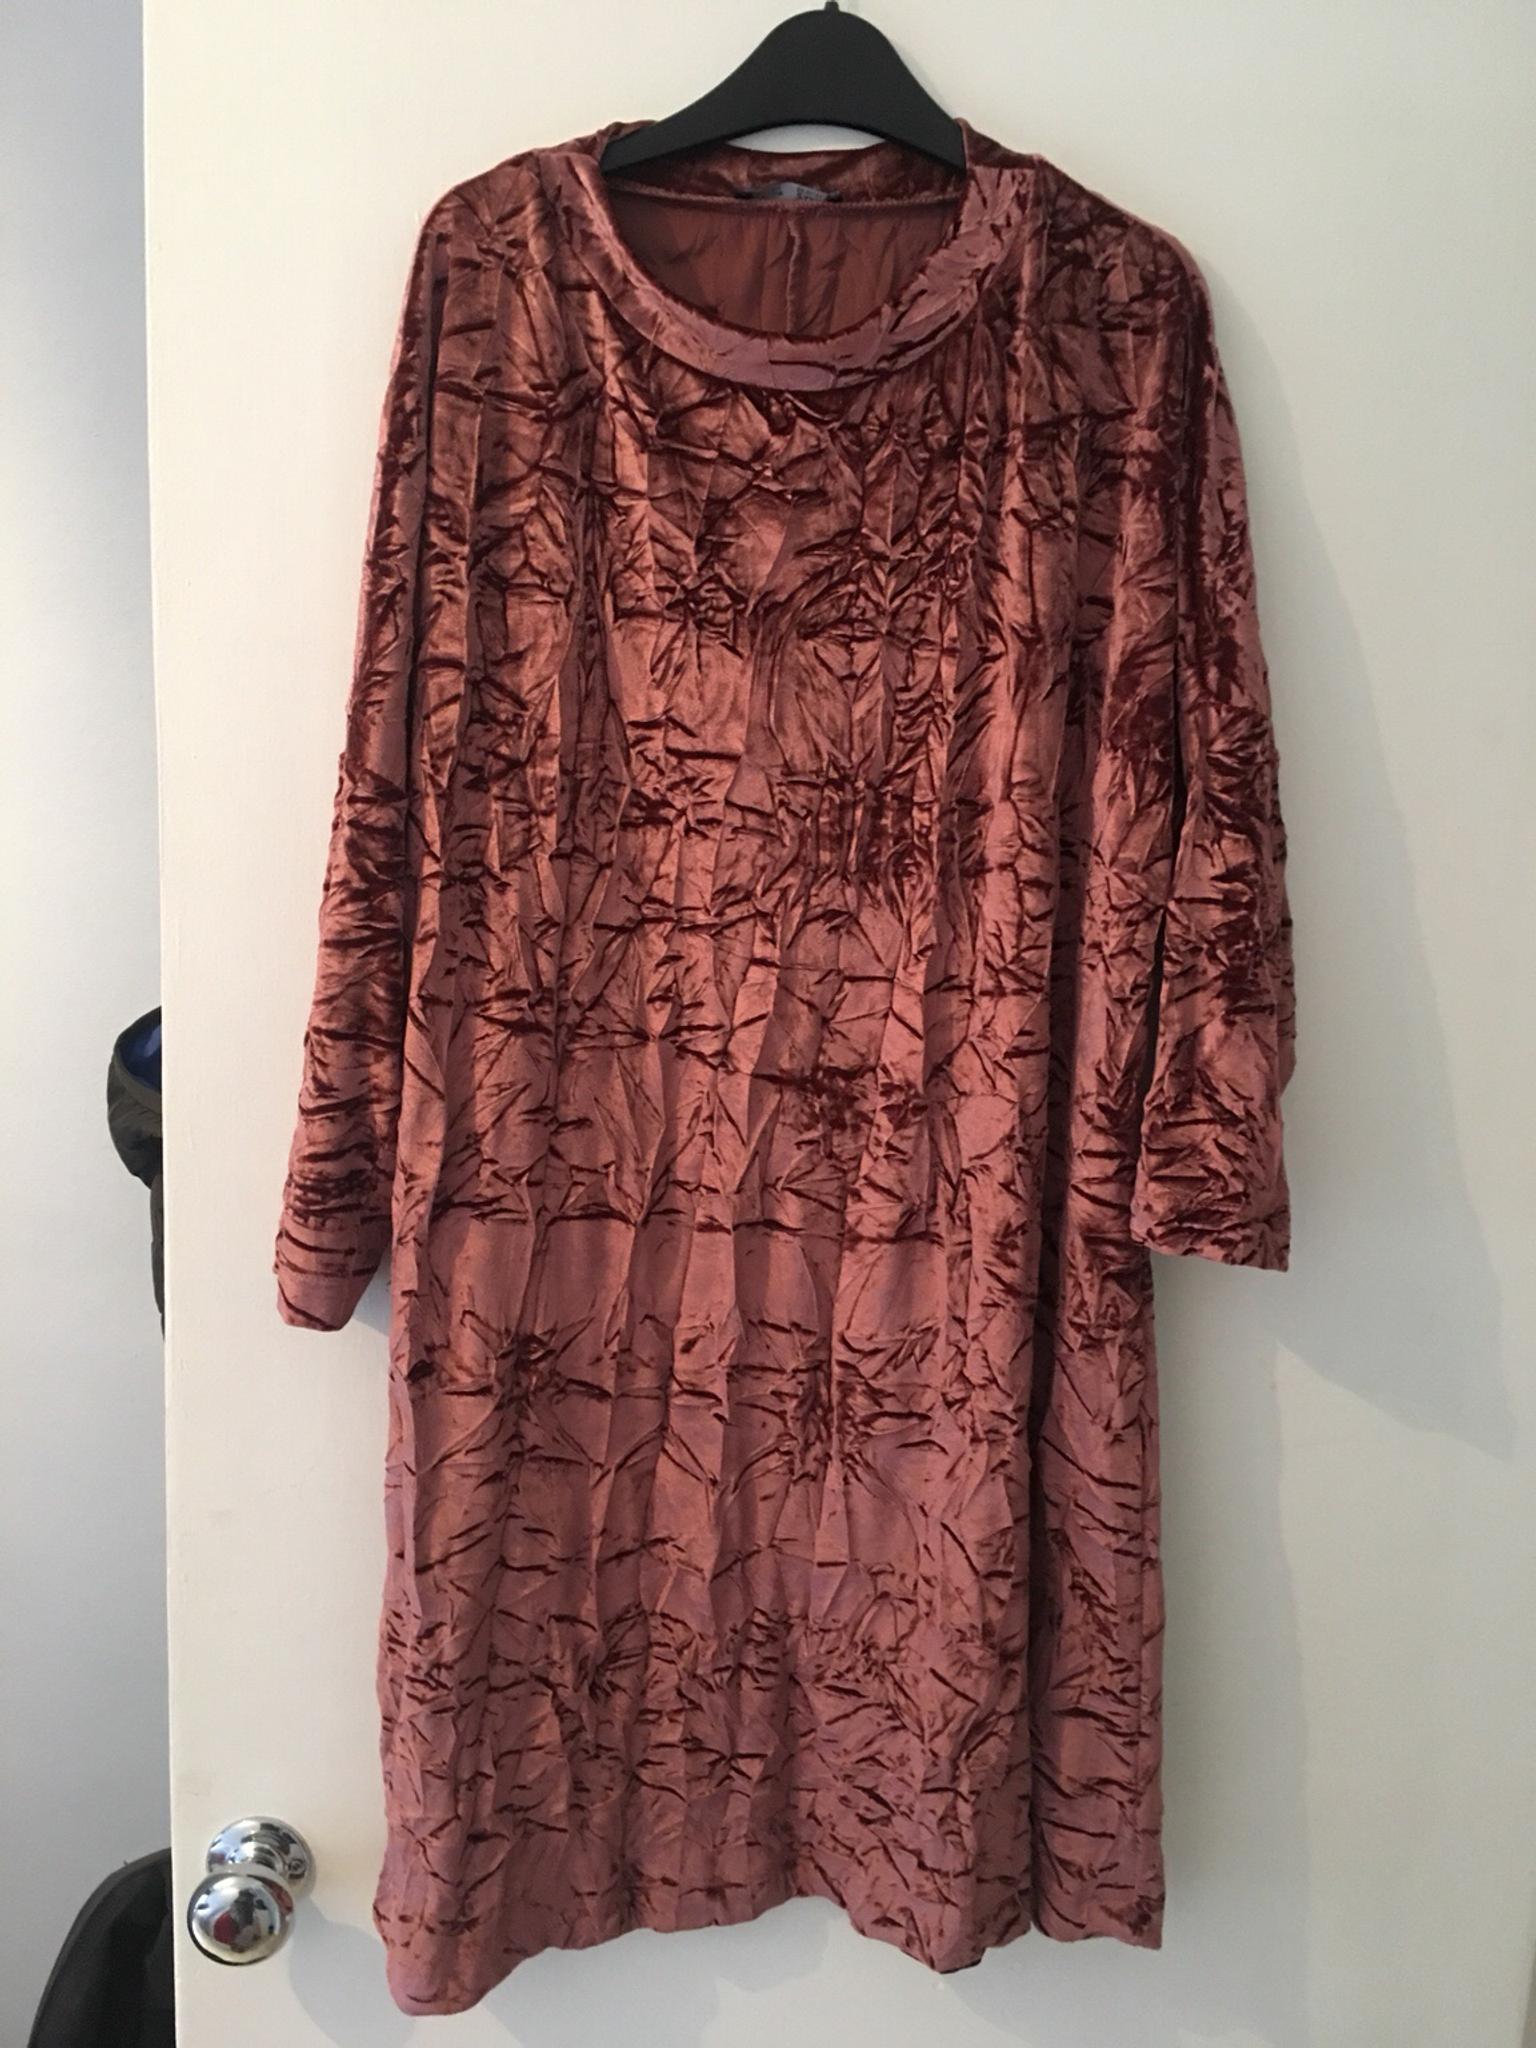 ZARA pink crushed velvet dress in N1 